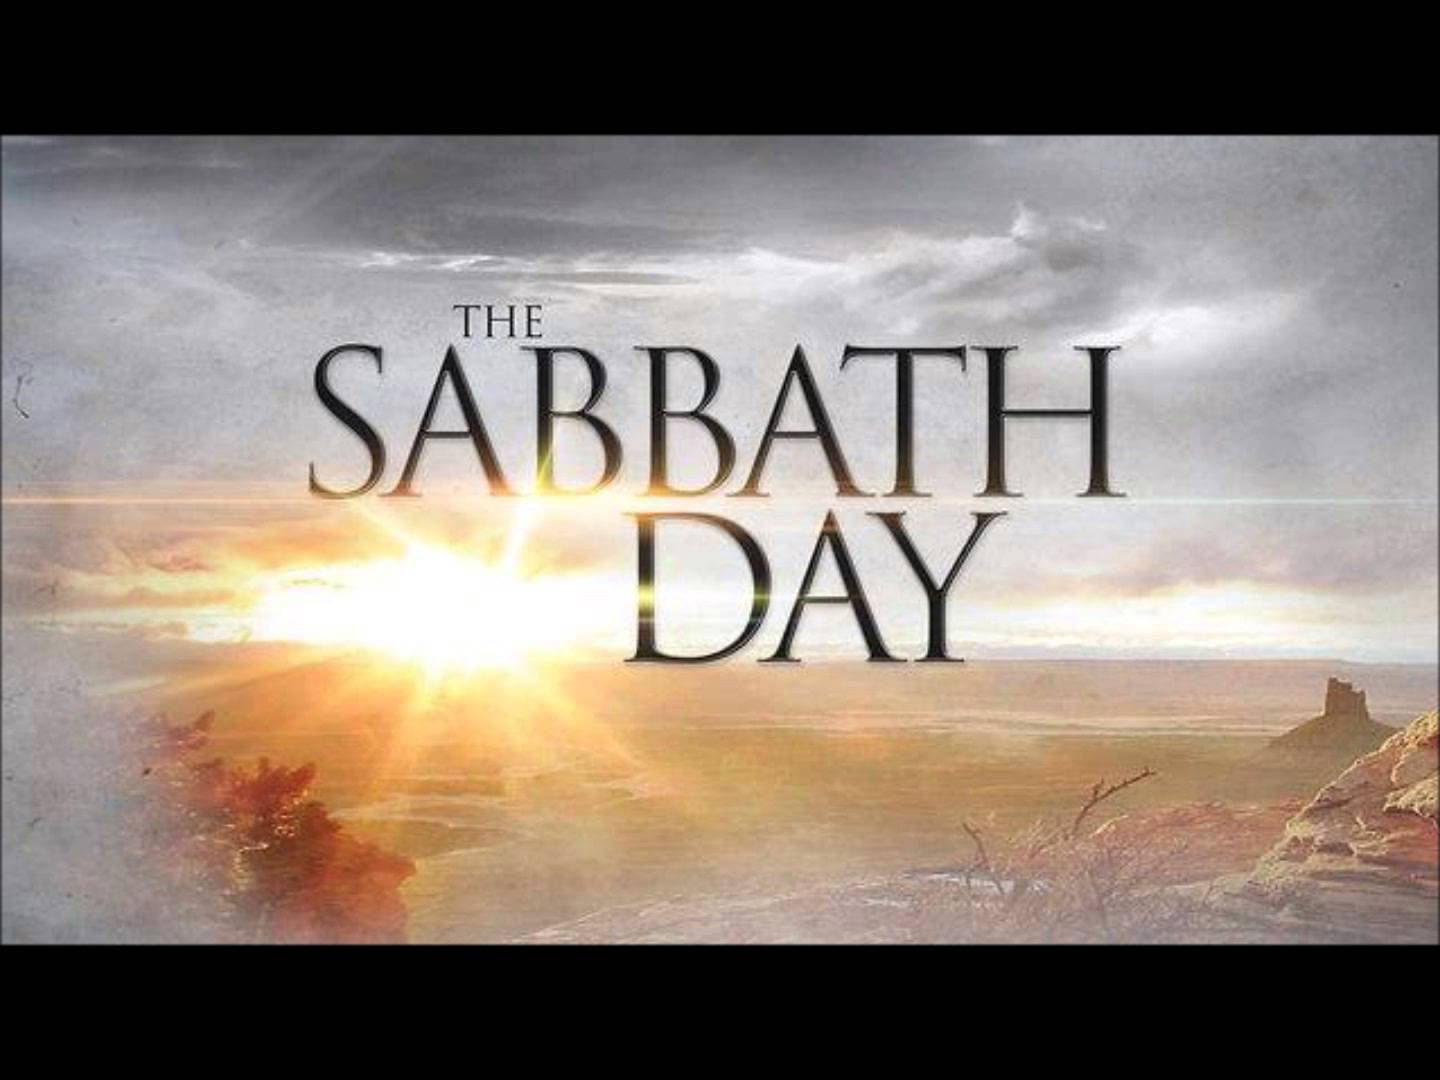 SABBATH TRUTH